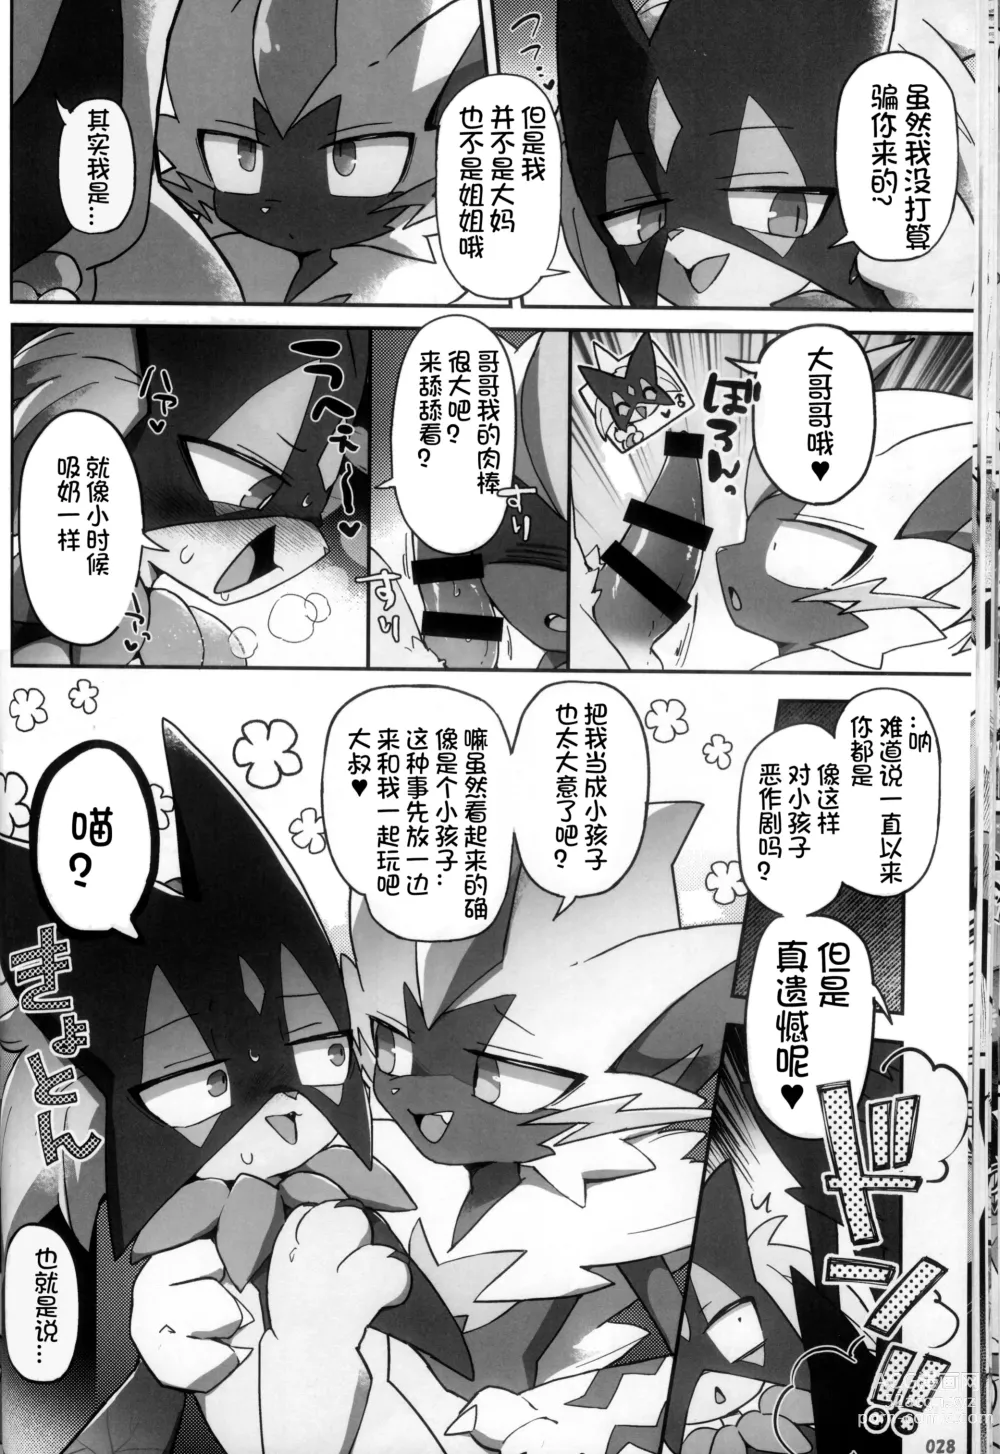 Page 27 of doujinshi Kairaku Ochi ♂ 4